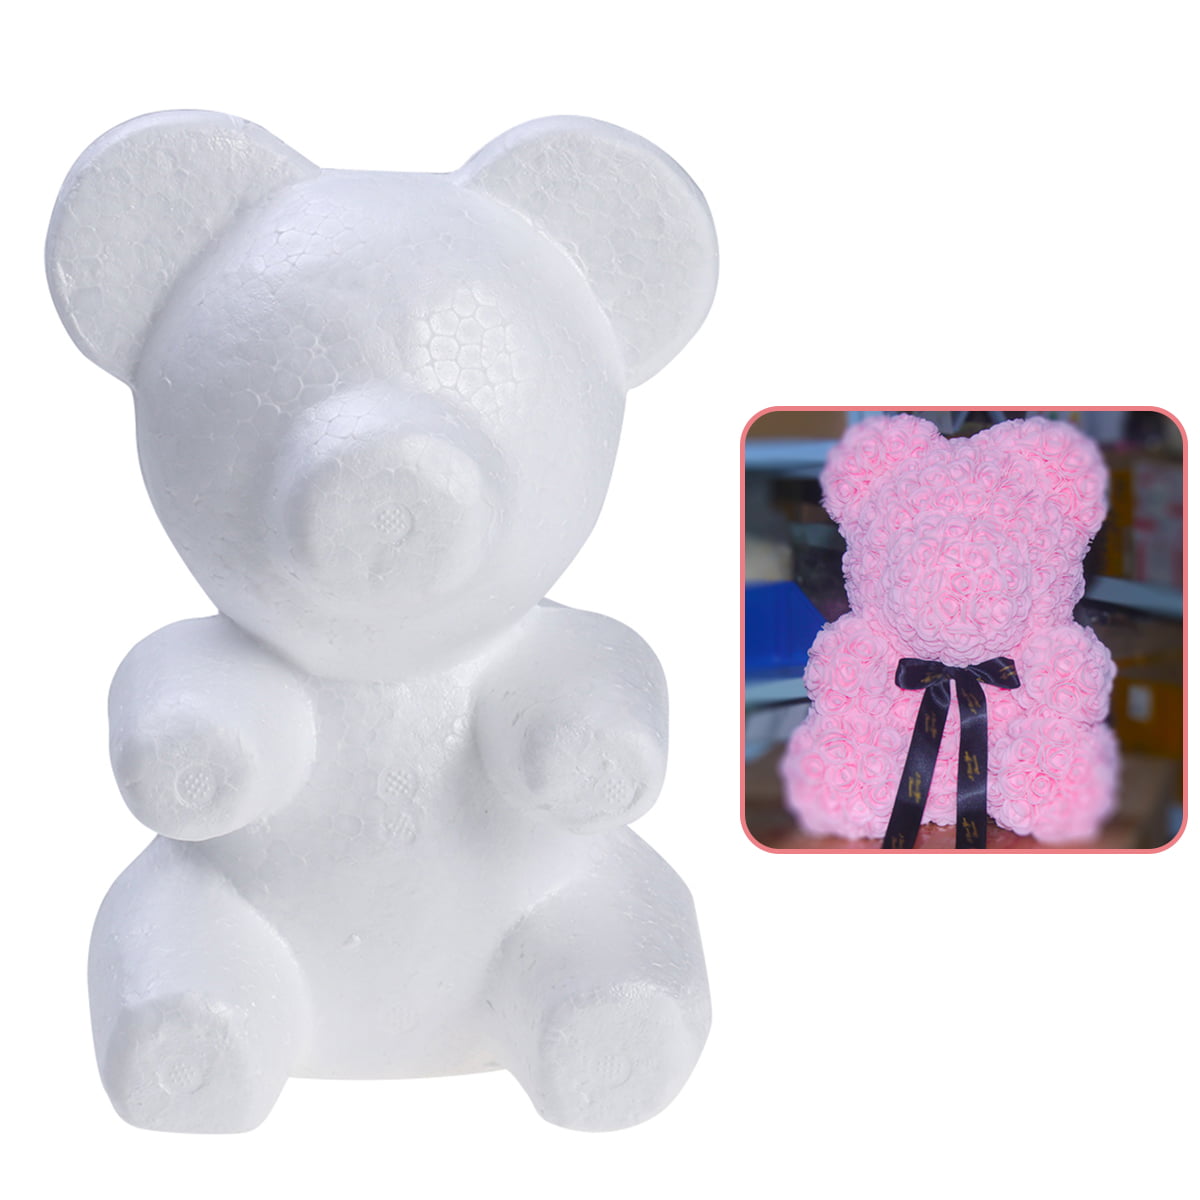 Holibanna Polystyrene Styrofoam Bear Shapes Modelling White Mould Crafts Valentines Wedding Flower Arranging Ornaments 2pcs 